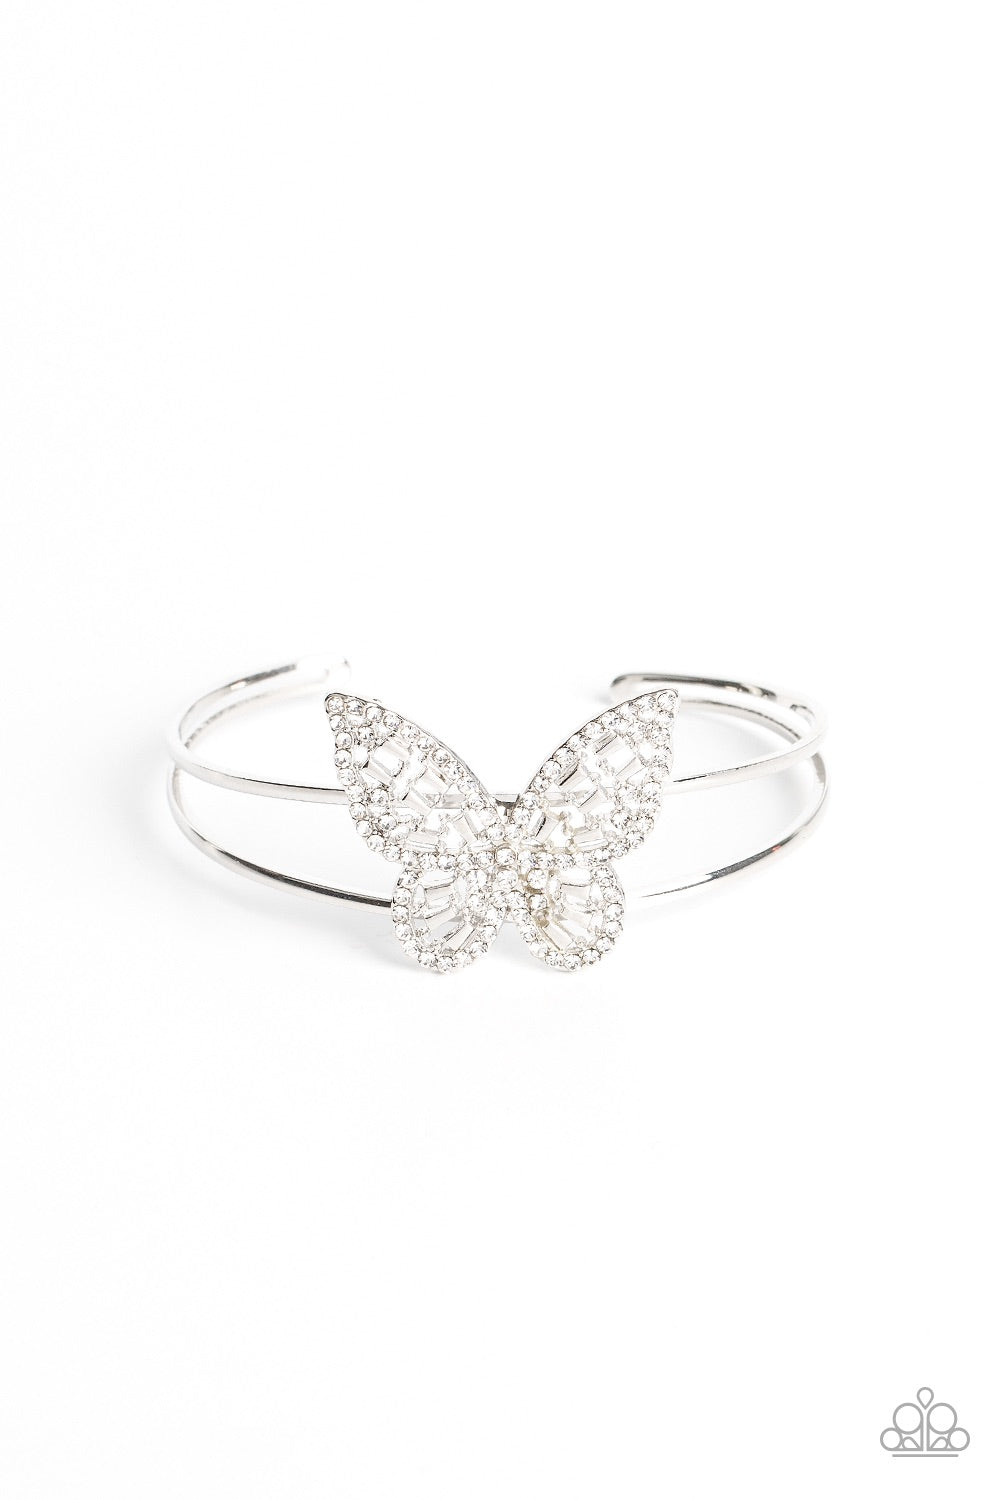 Butterfly Bella - White Bracelet - A Finishing Touch Jewelry